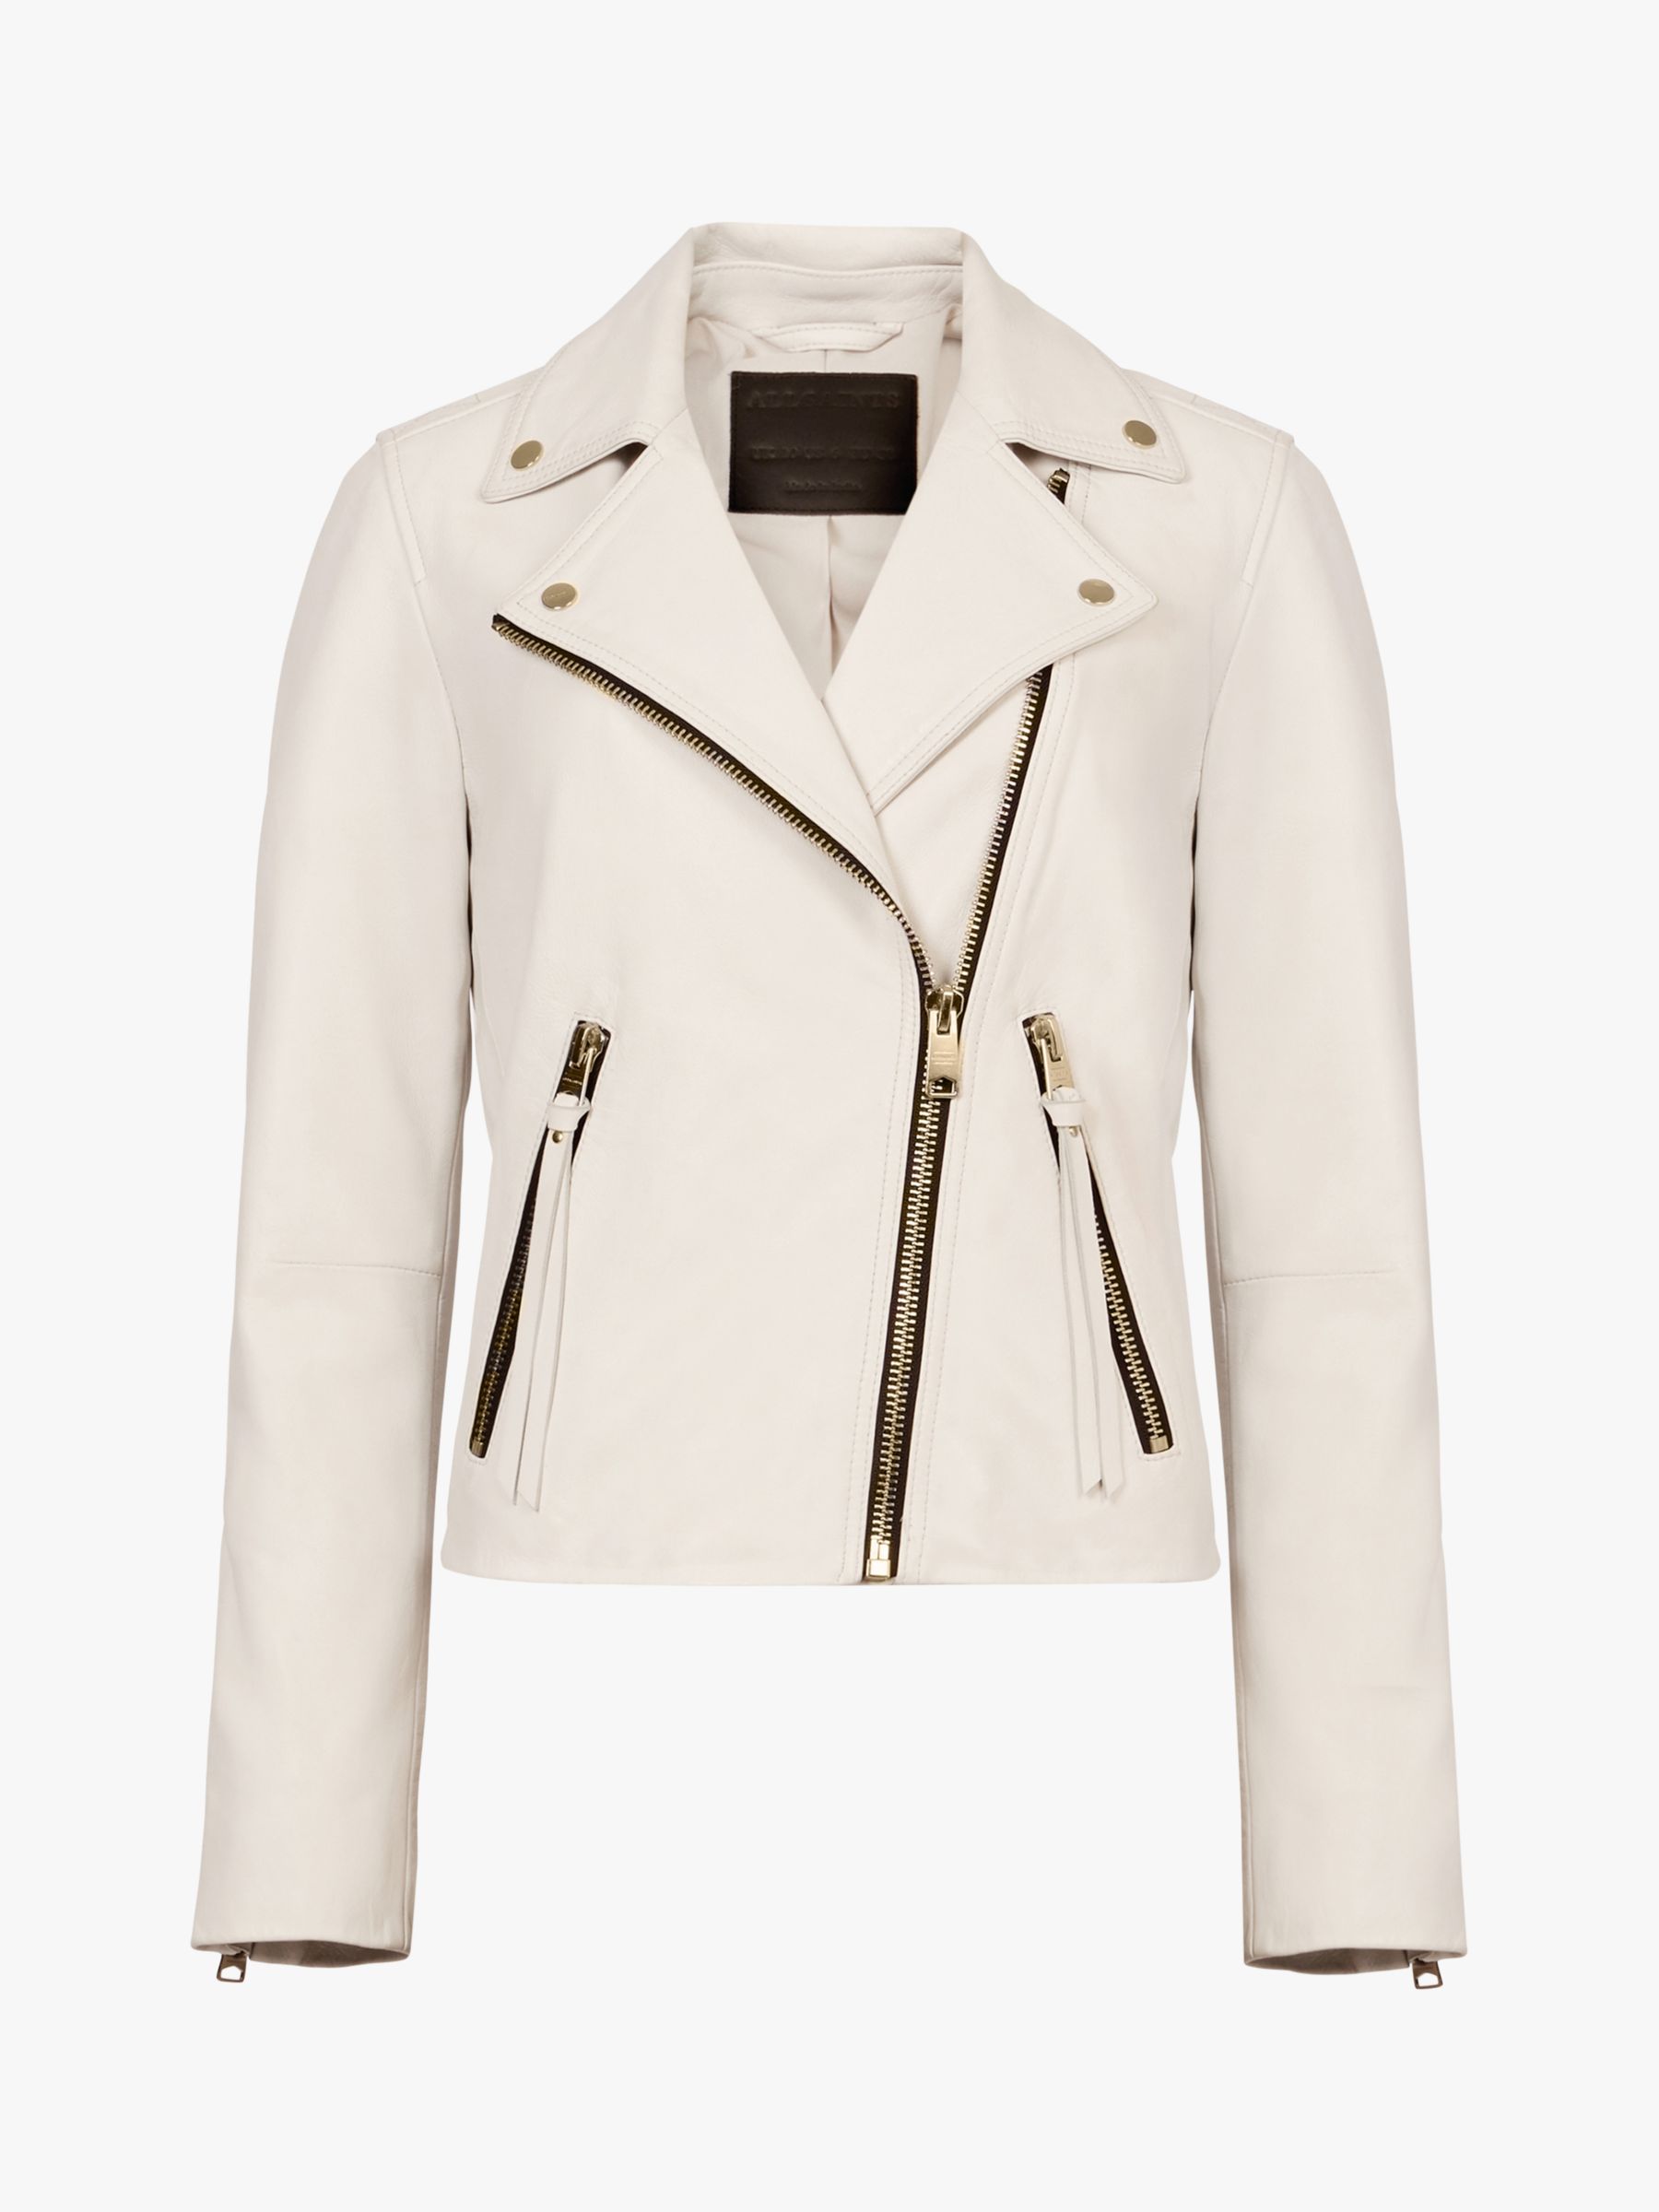 AllSaints Dalby Leather Biker Jacket, Ivory White, 6